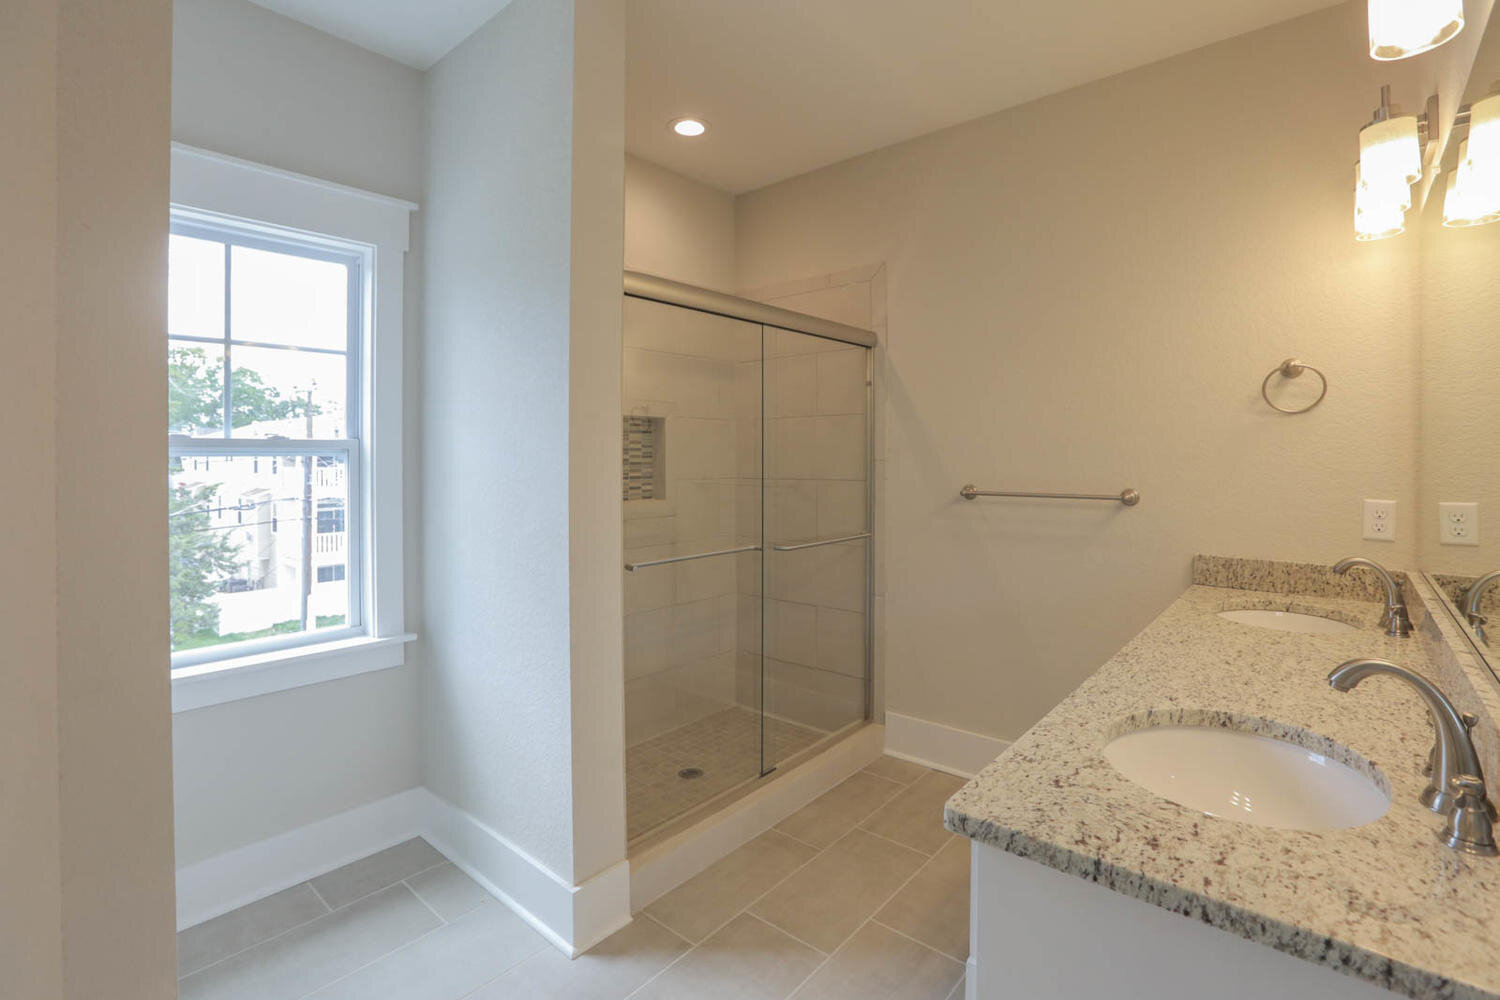 1412 Cypress Ave Virginia-large-036-19-Master Bedroom 2 Bath-1500x1000-72dpi.jpg